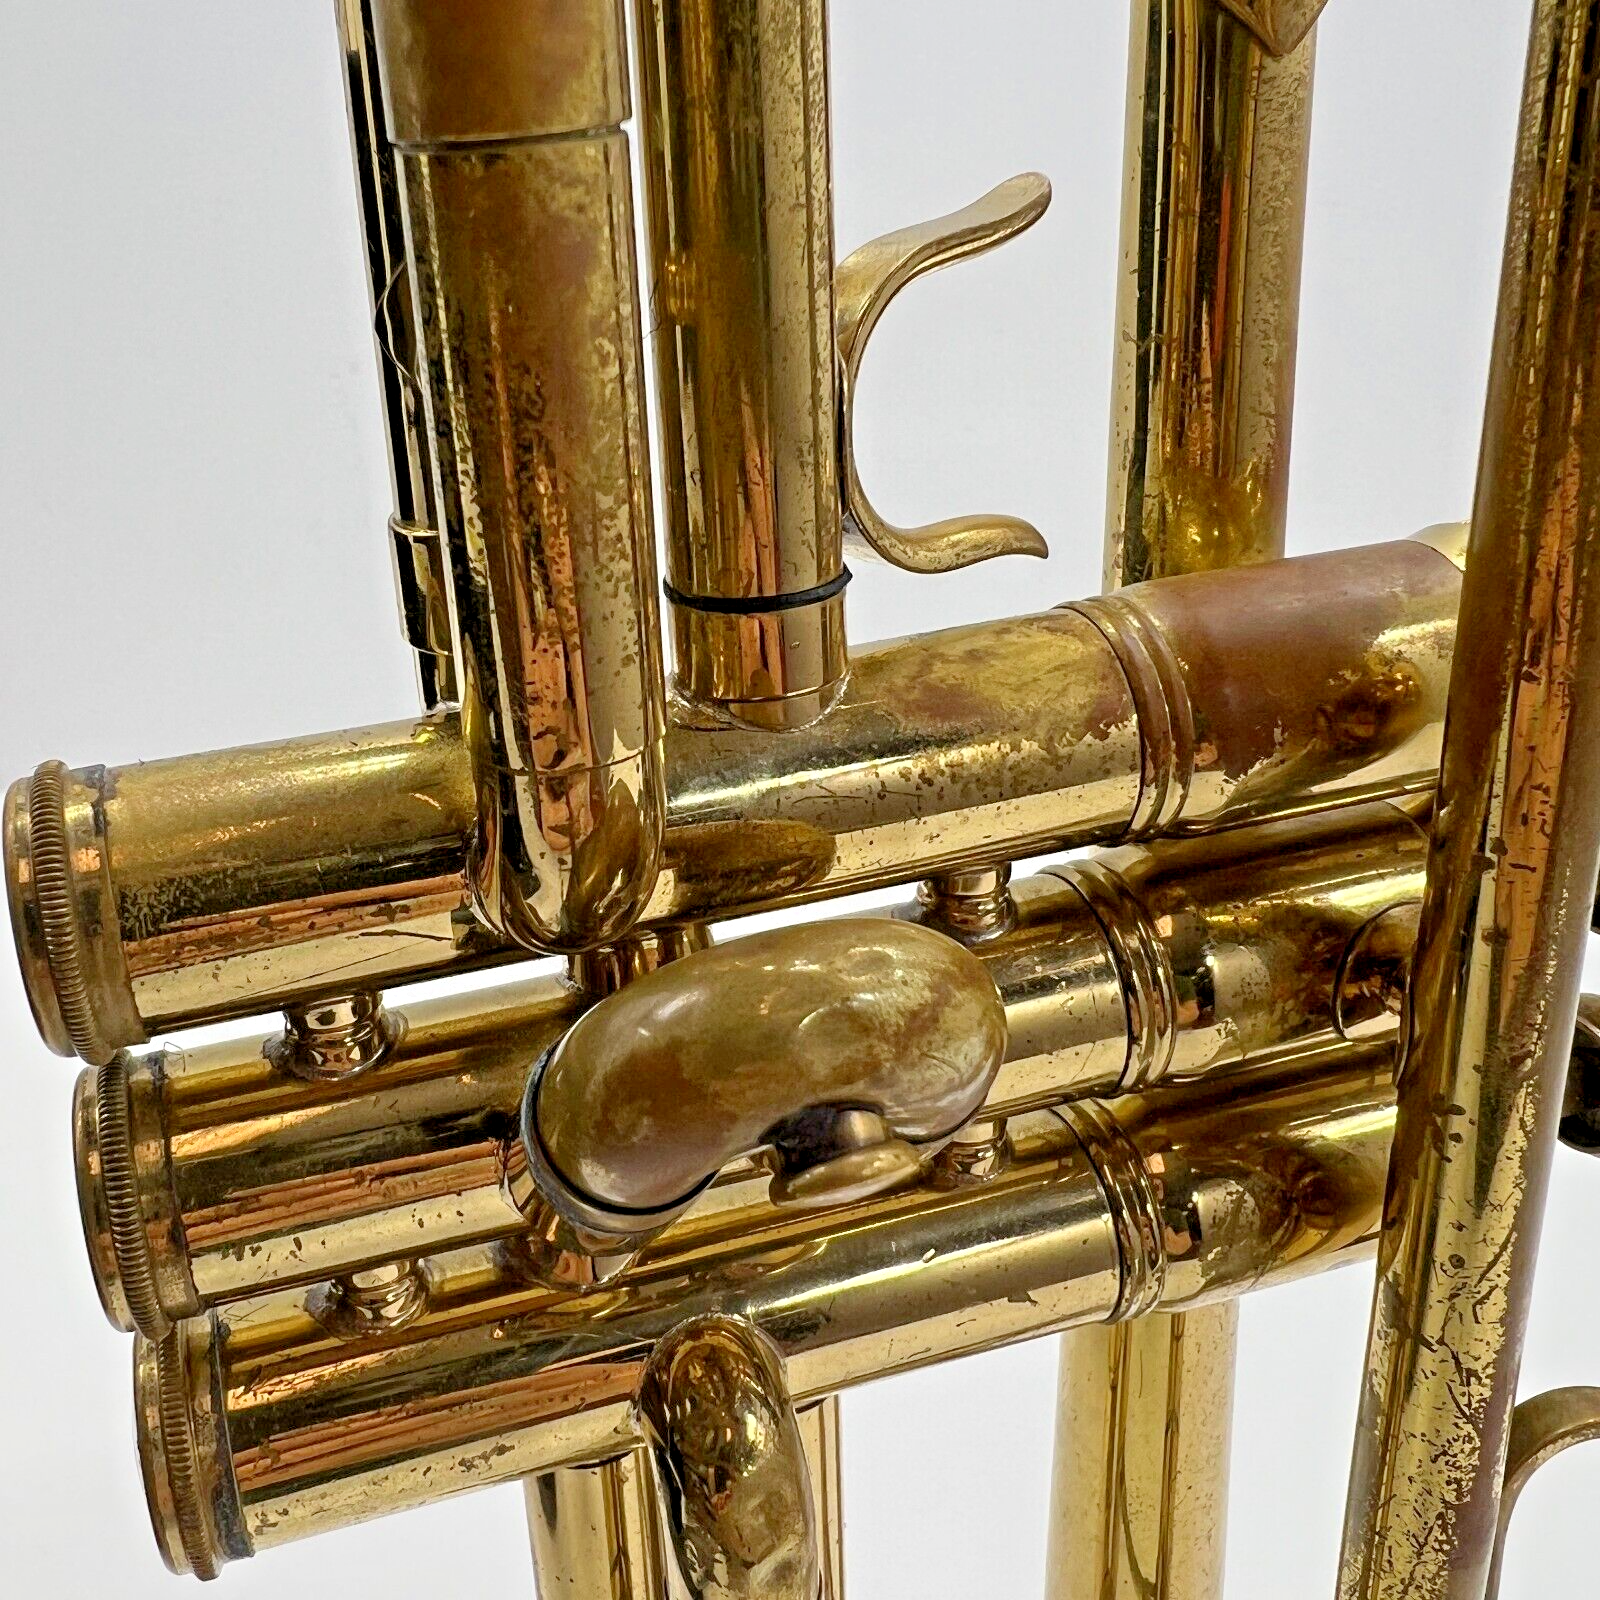 King 1501 U.S.A. Trumpet in Case for Restoration 5